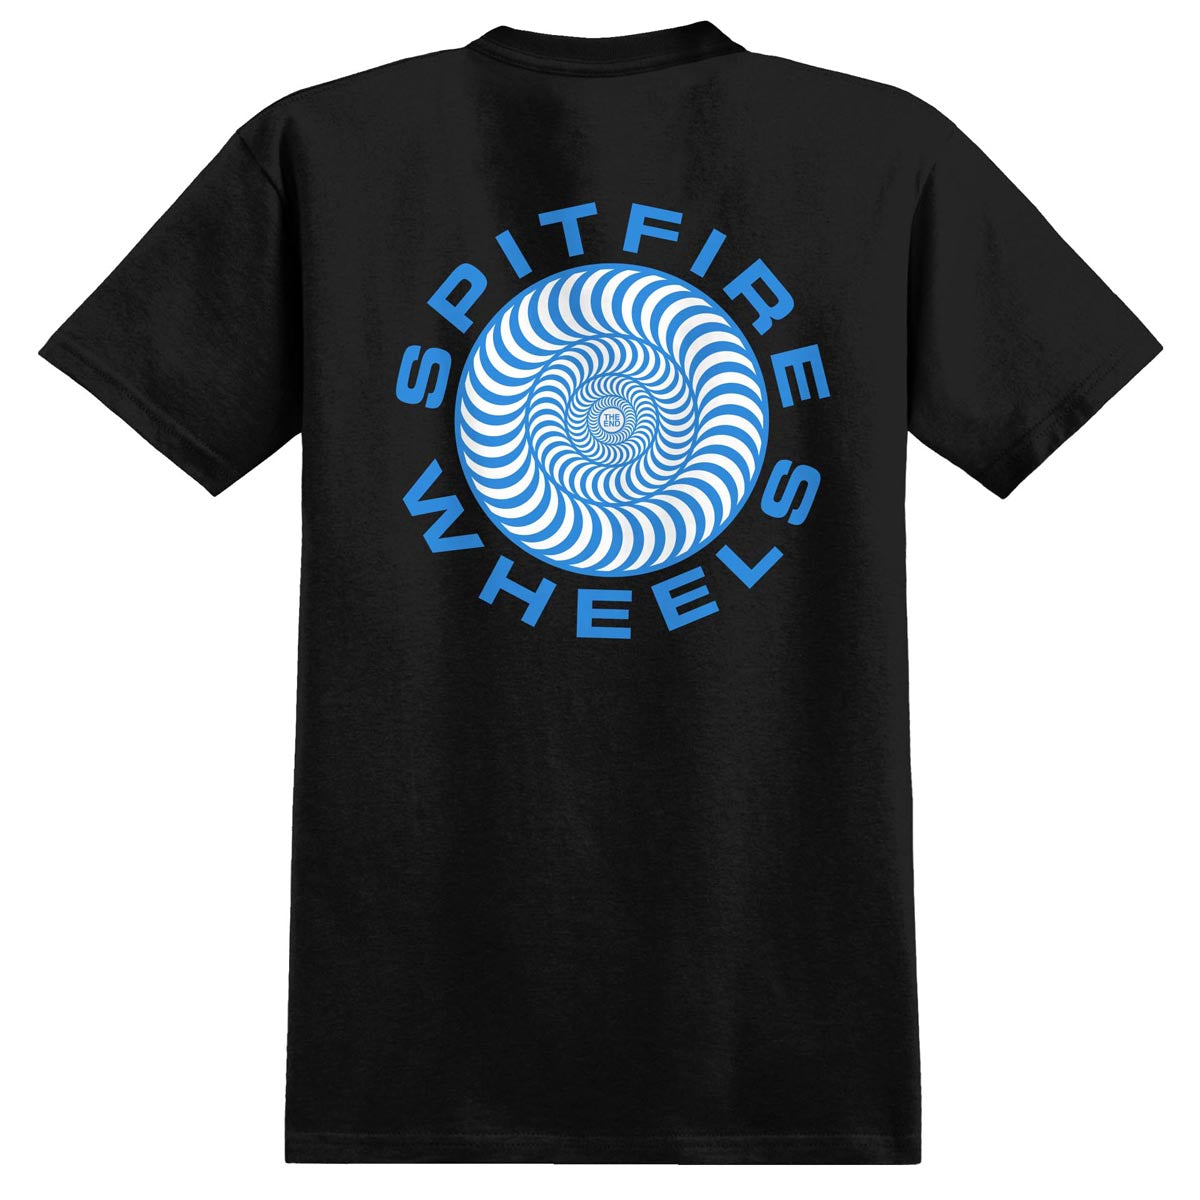 Spitfire Classic '87 Swirl Fill T-Shirt - Black/Blue/White image 1